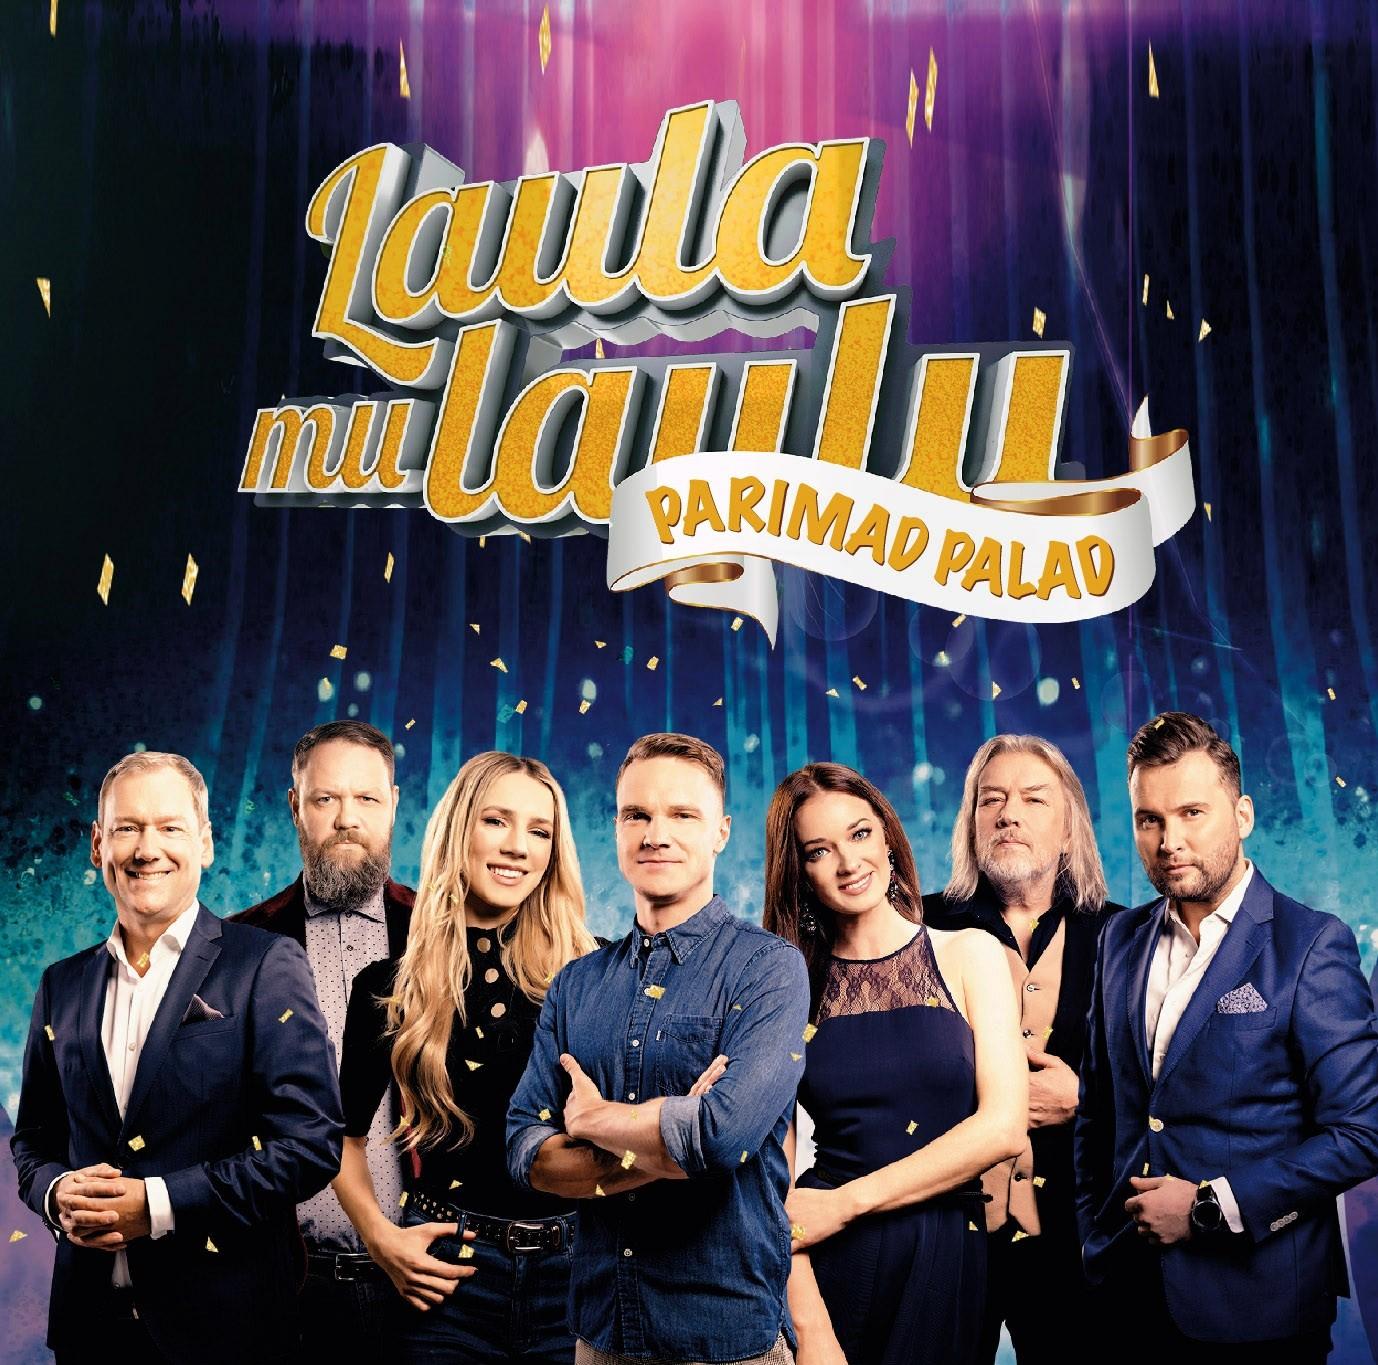 LAULA MU LAULU - PARIMAD PALAD (2018) CD